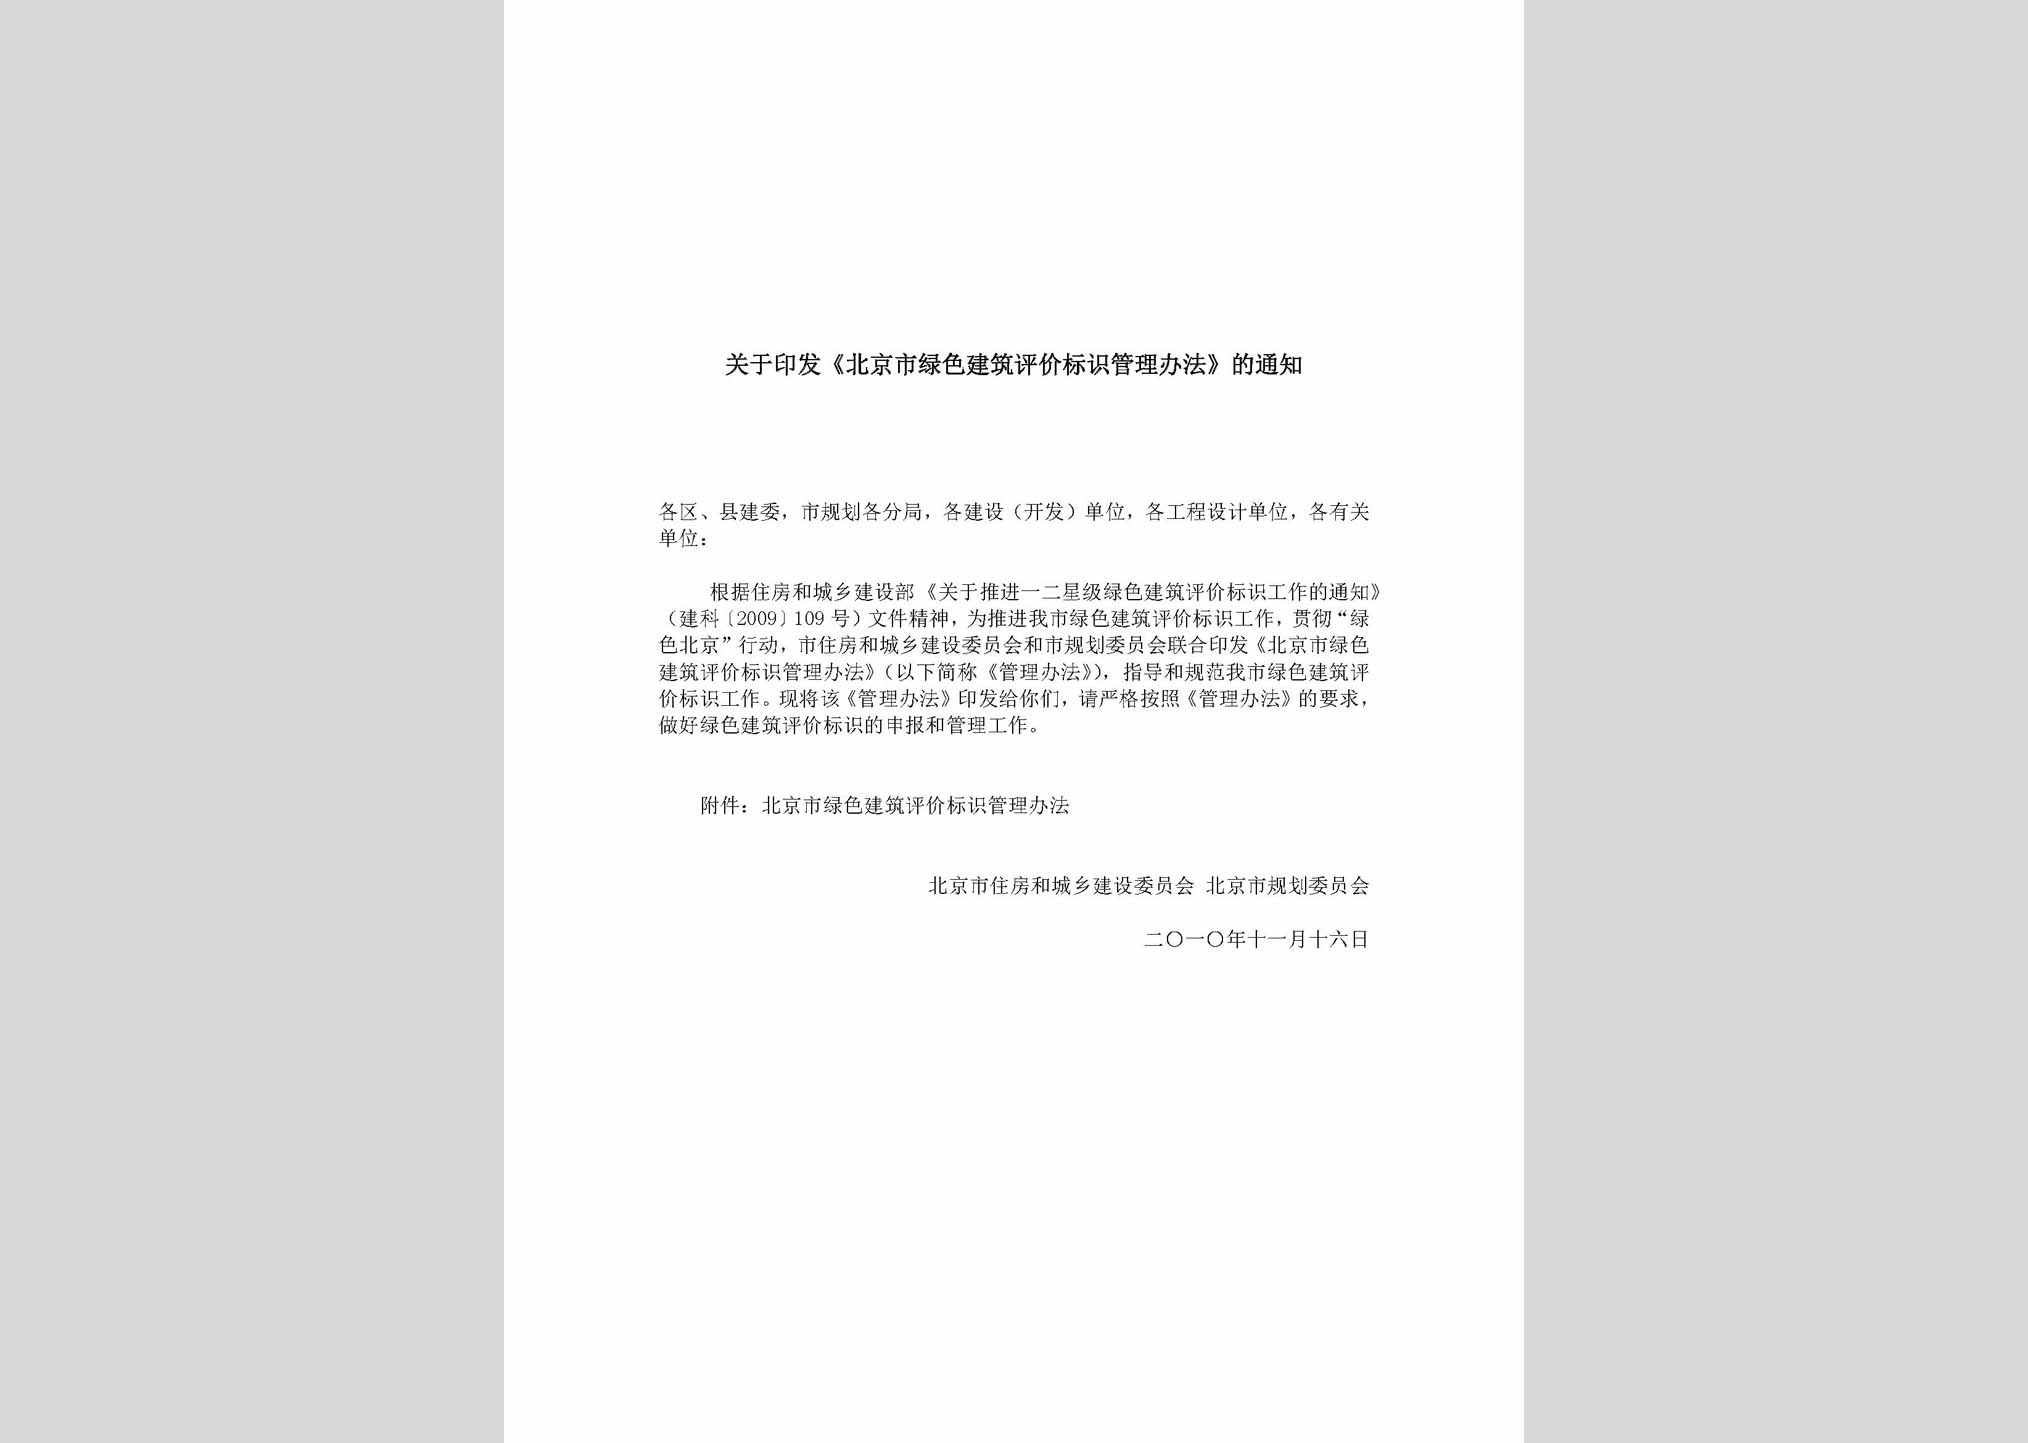 BJ-LSGLBF-2010：关于印发《北京市绿色建筑评价标识管理办法》的通知